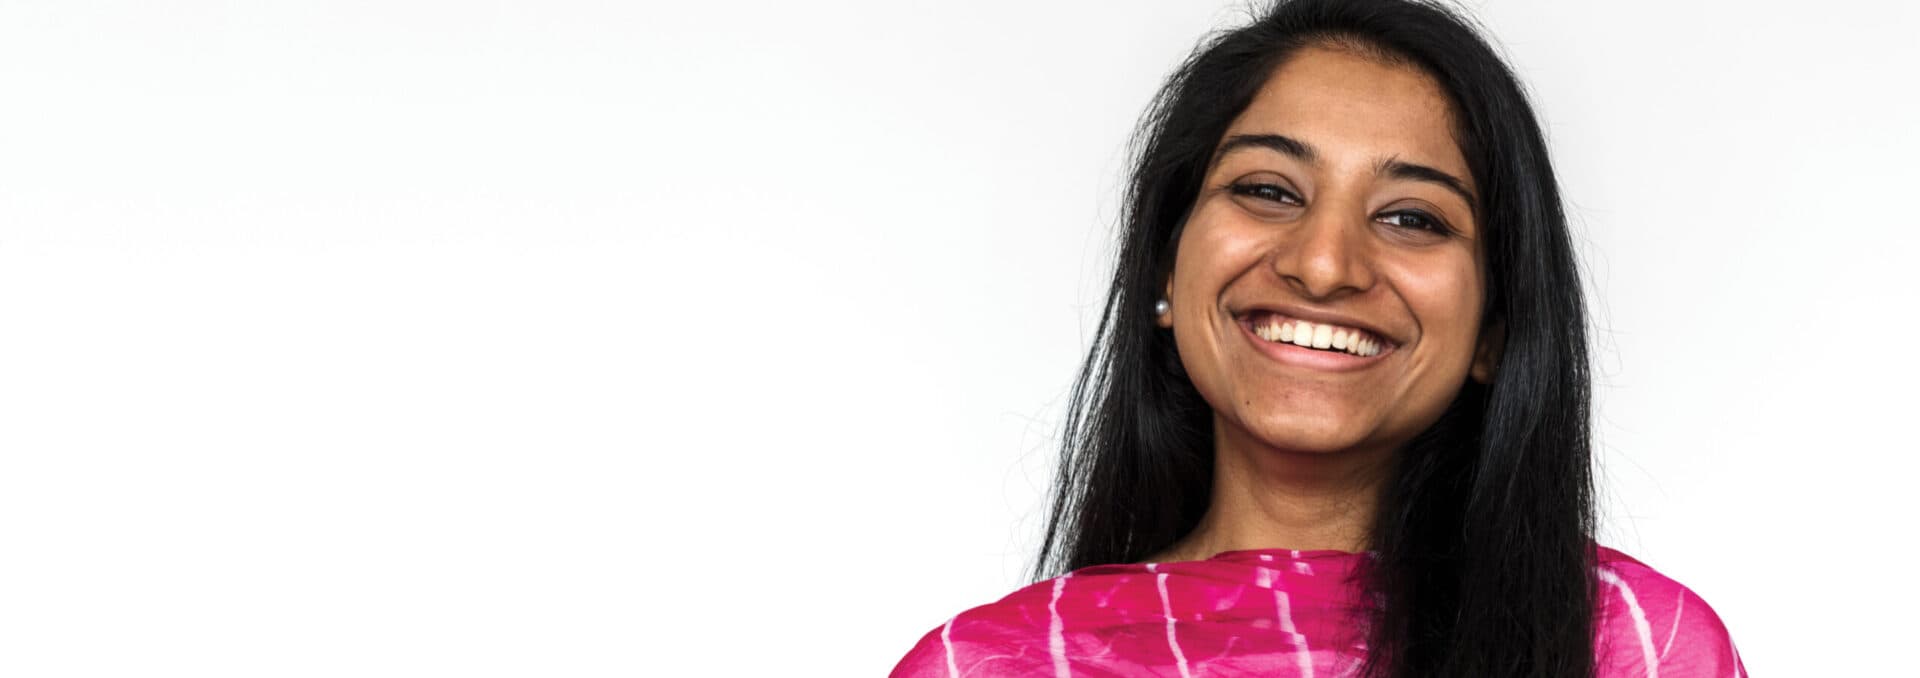 A woman in a sari smiles at the camera